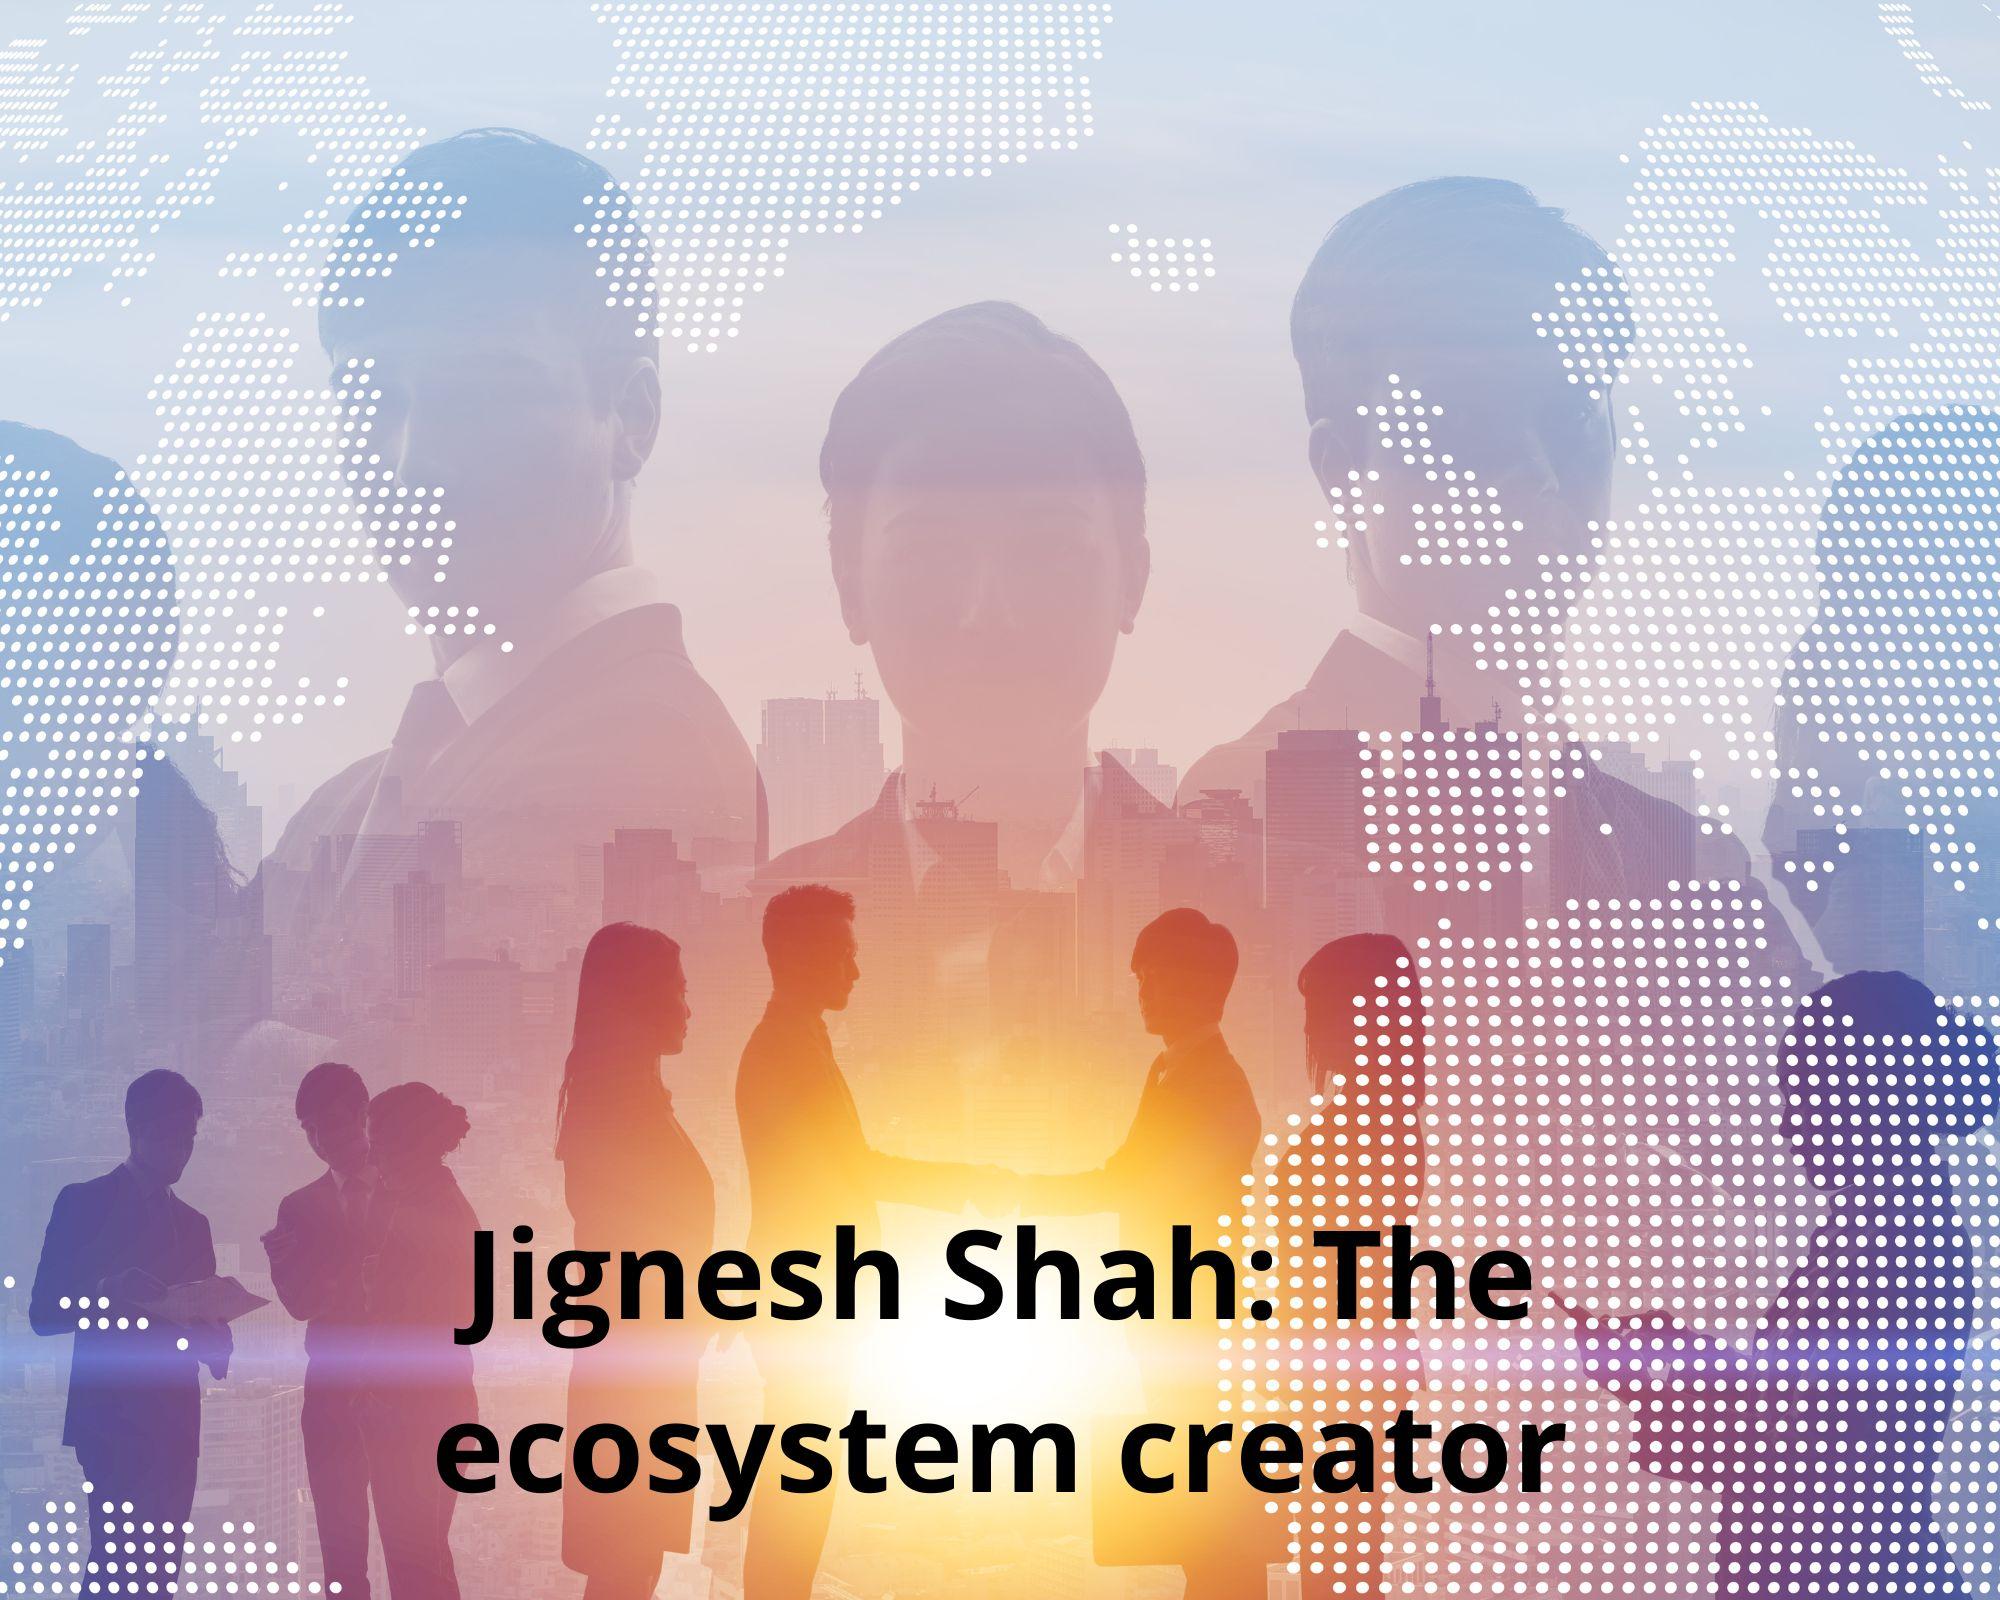 Jignesh Shah: The ecosystem creator - JustPaste.it